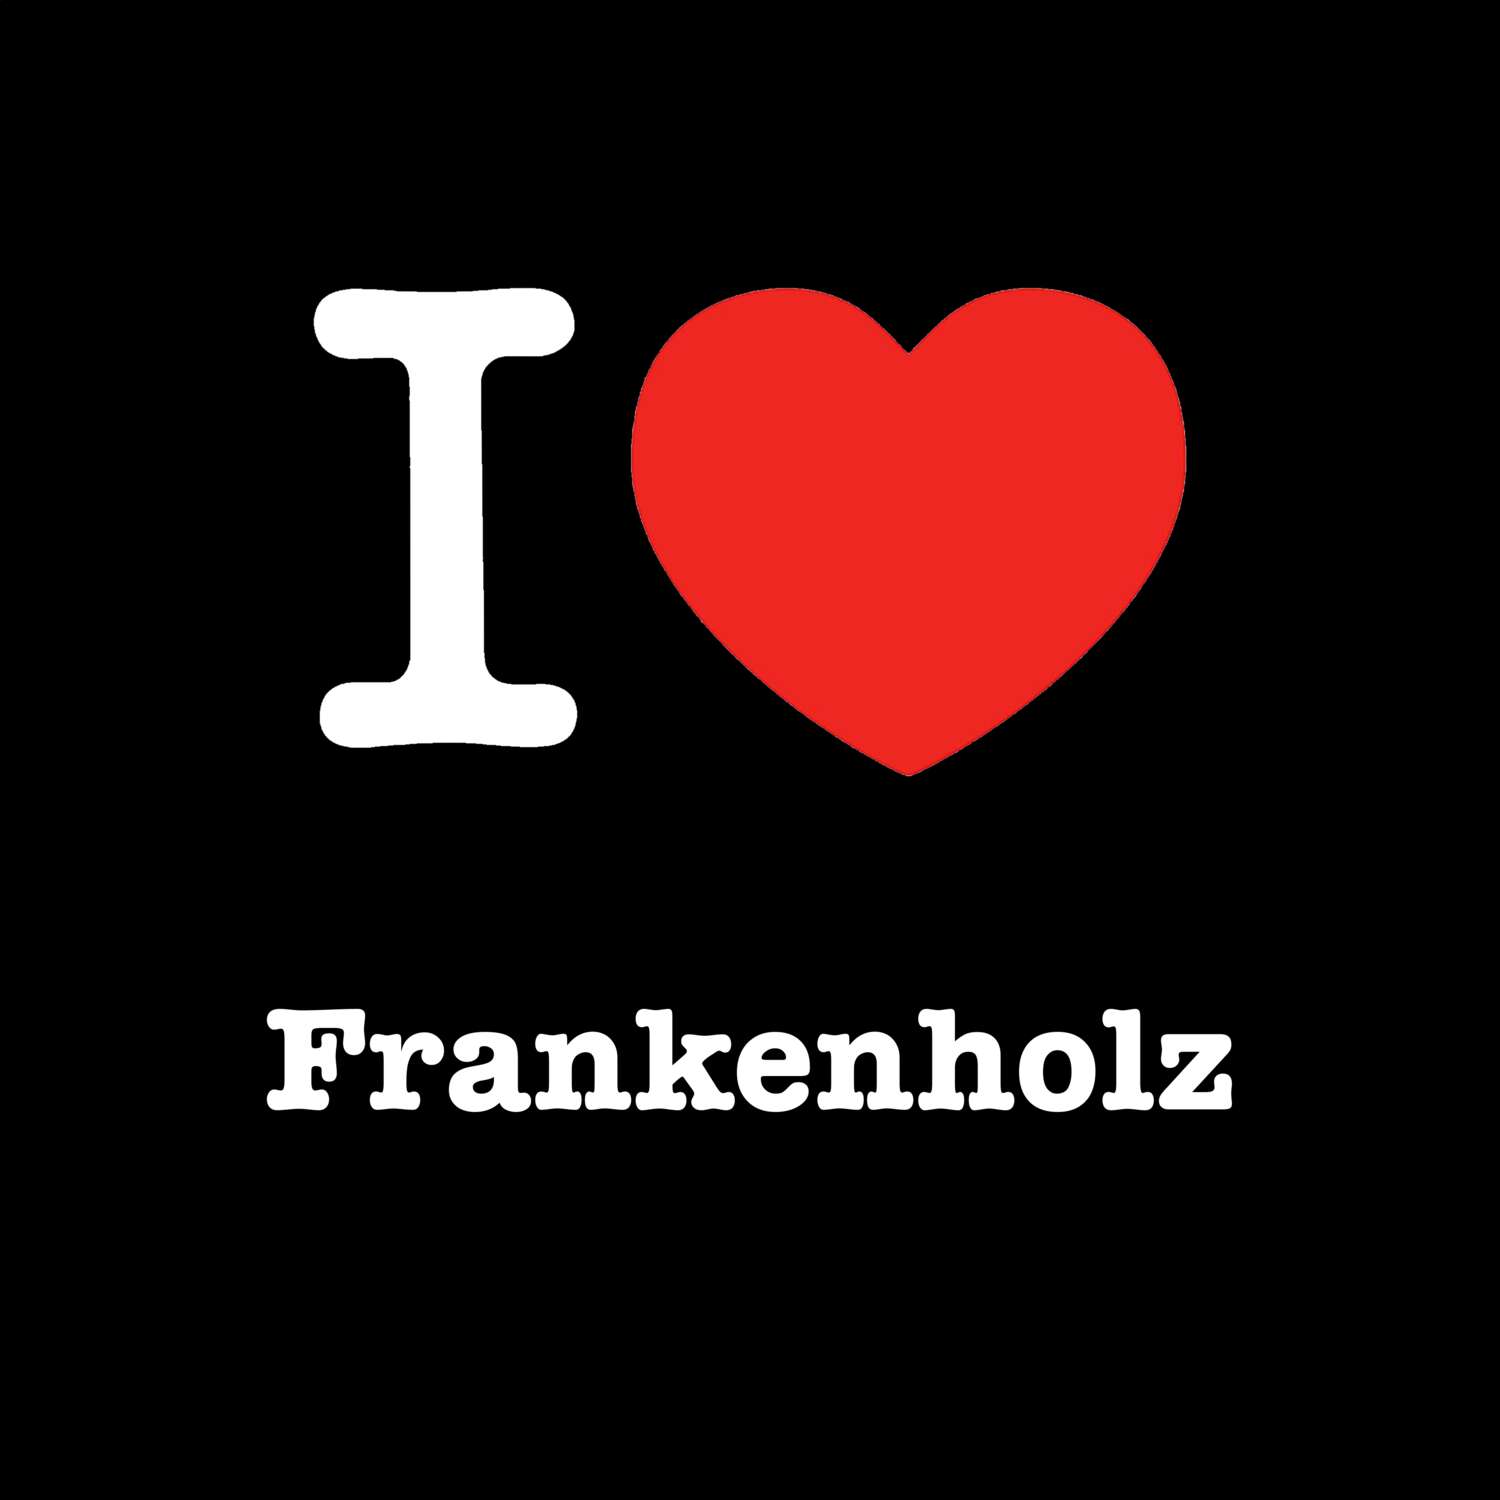 Frankenholz T-Shirt »I love«